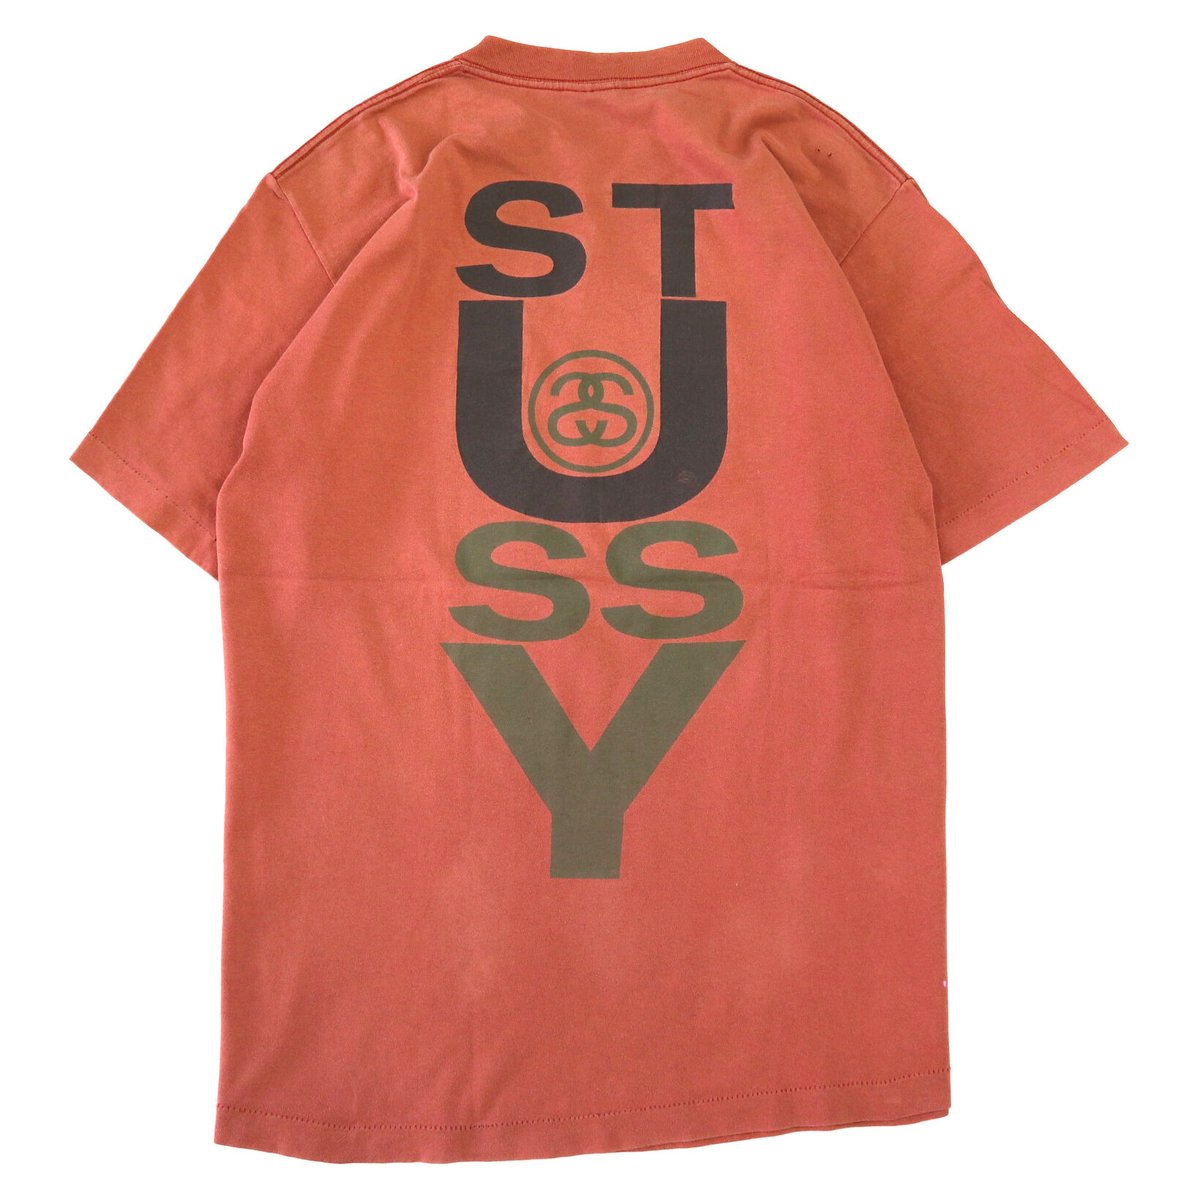 stussy coupe Tシャツ　Lサイズ　80s